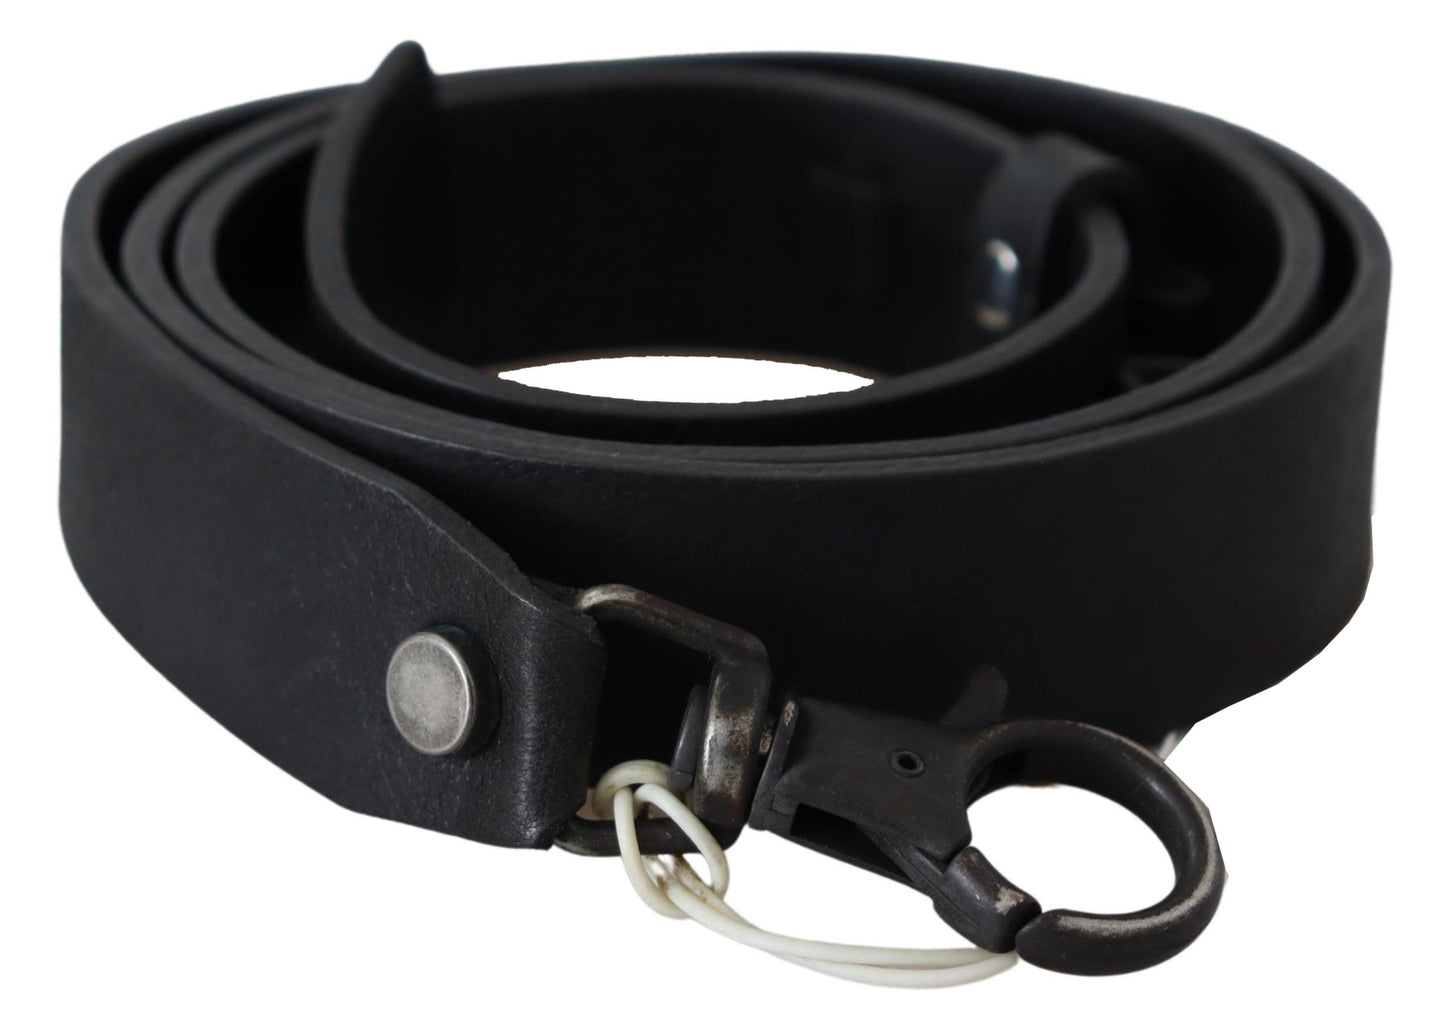 Chic Black Leather Waist Belt